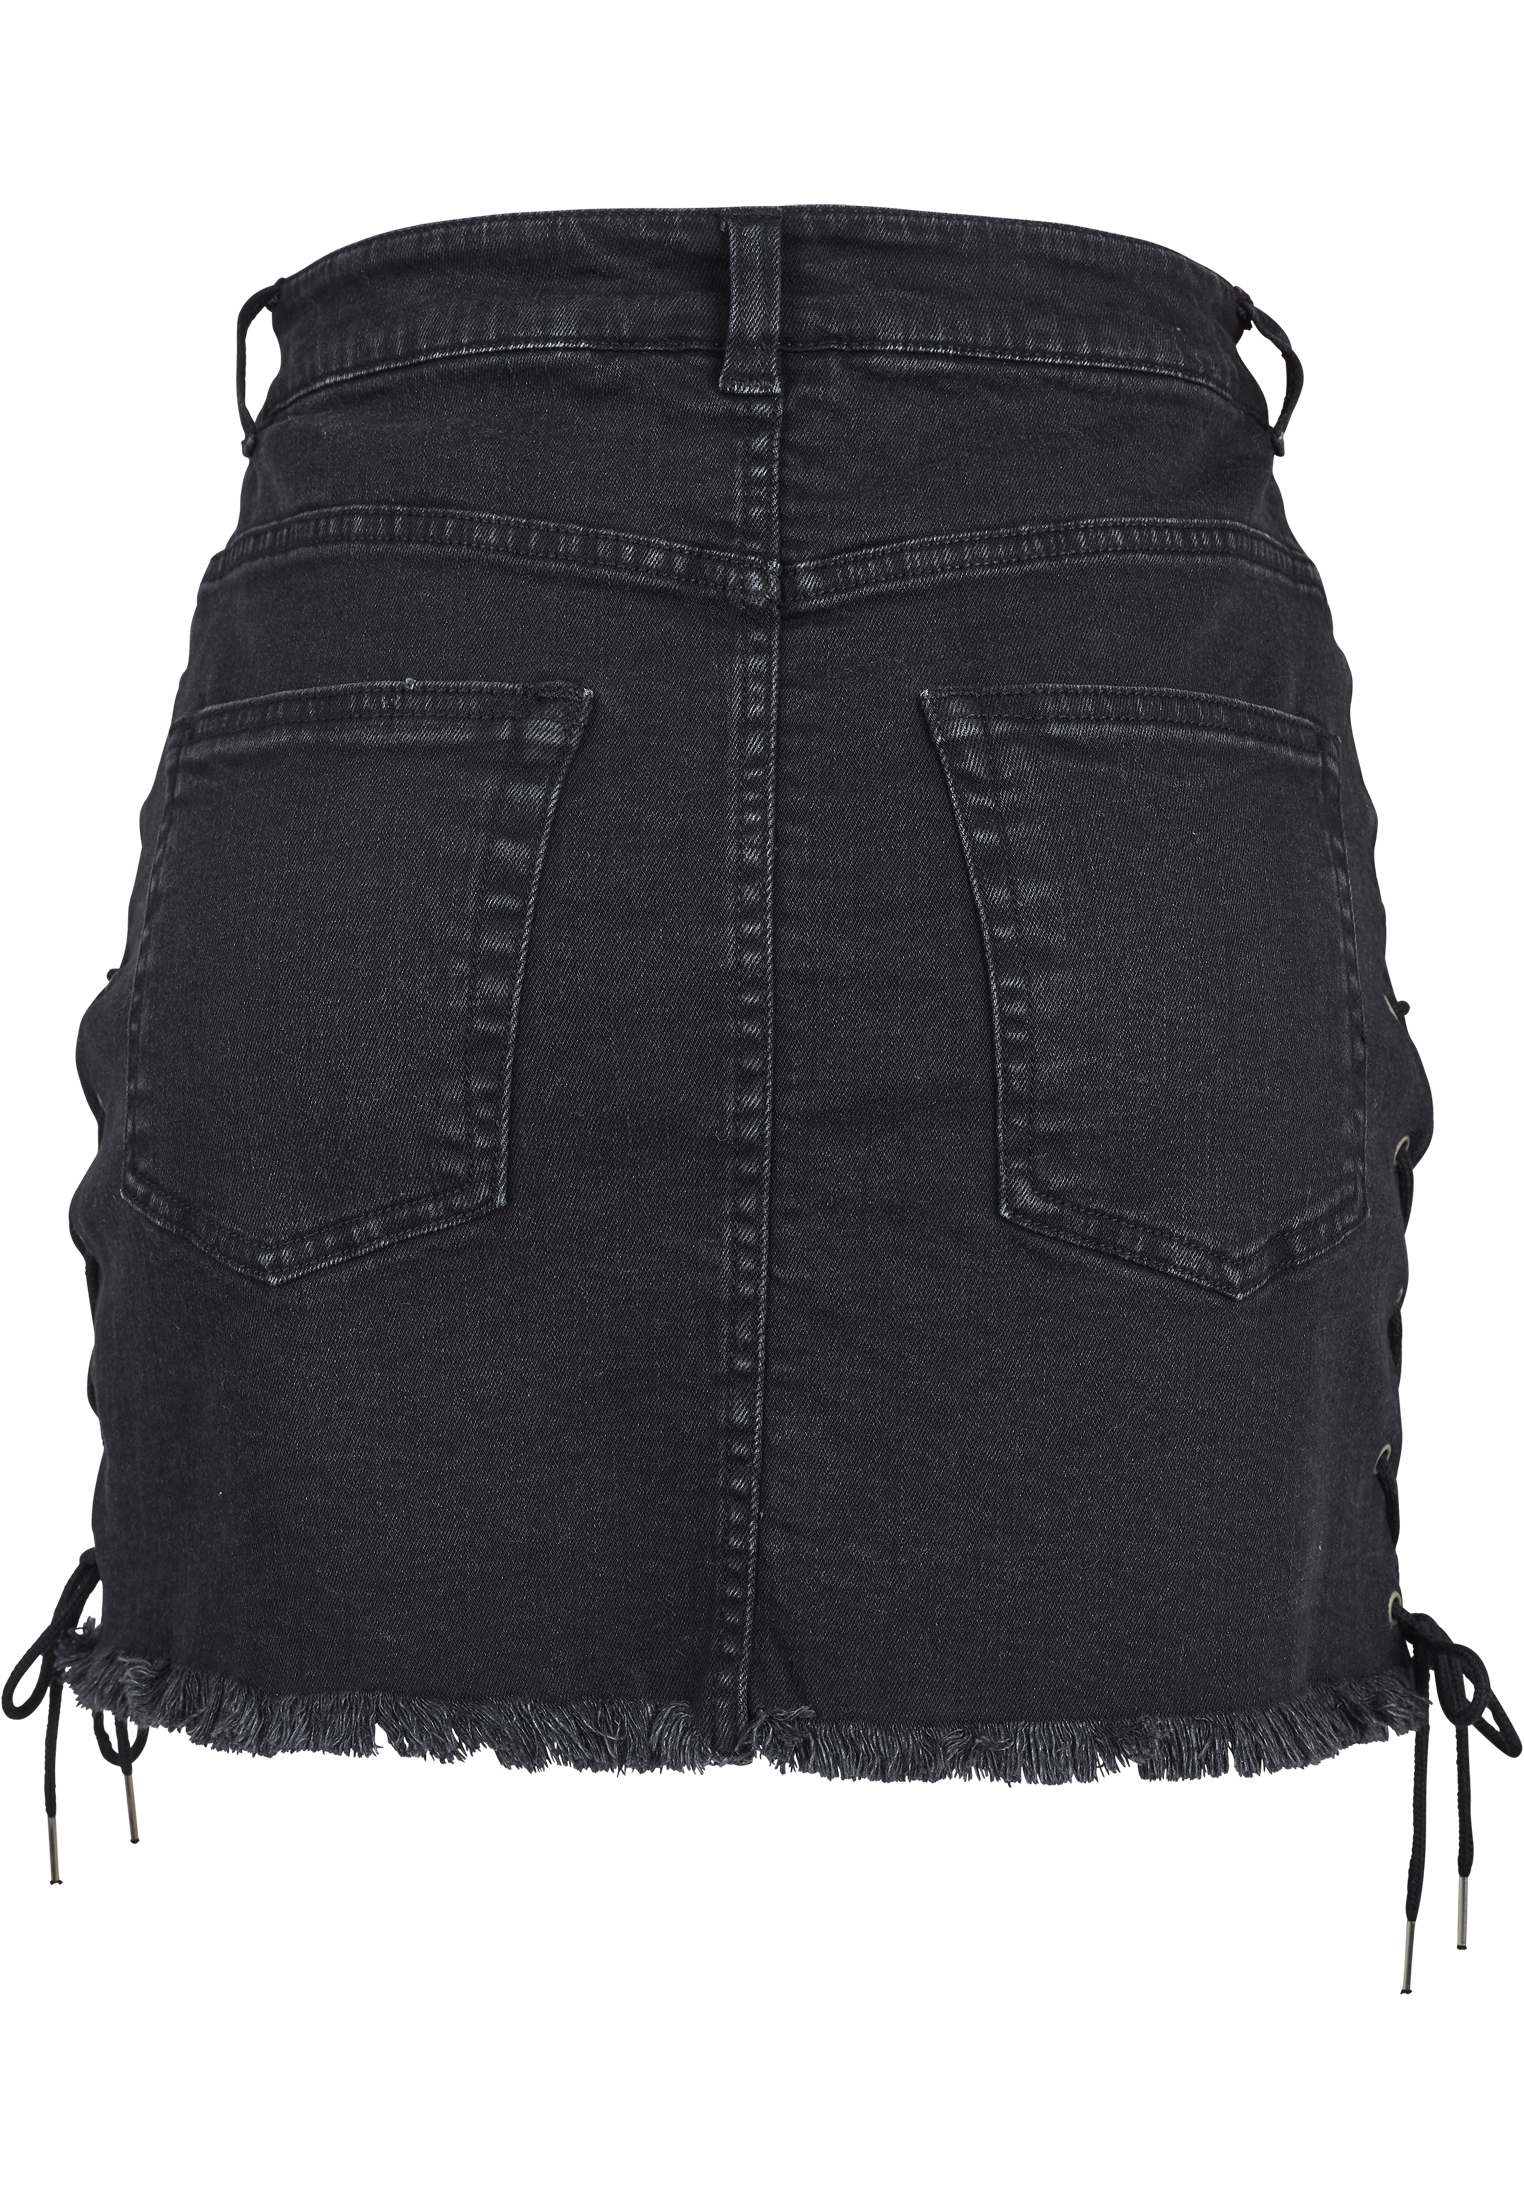 Kleider & R?cke Ladies Denim Lace Up Skirt in Farbe black washed